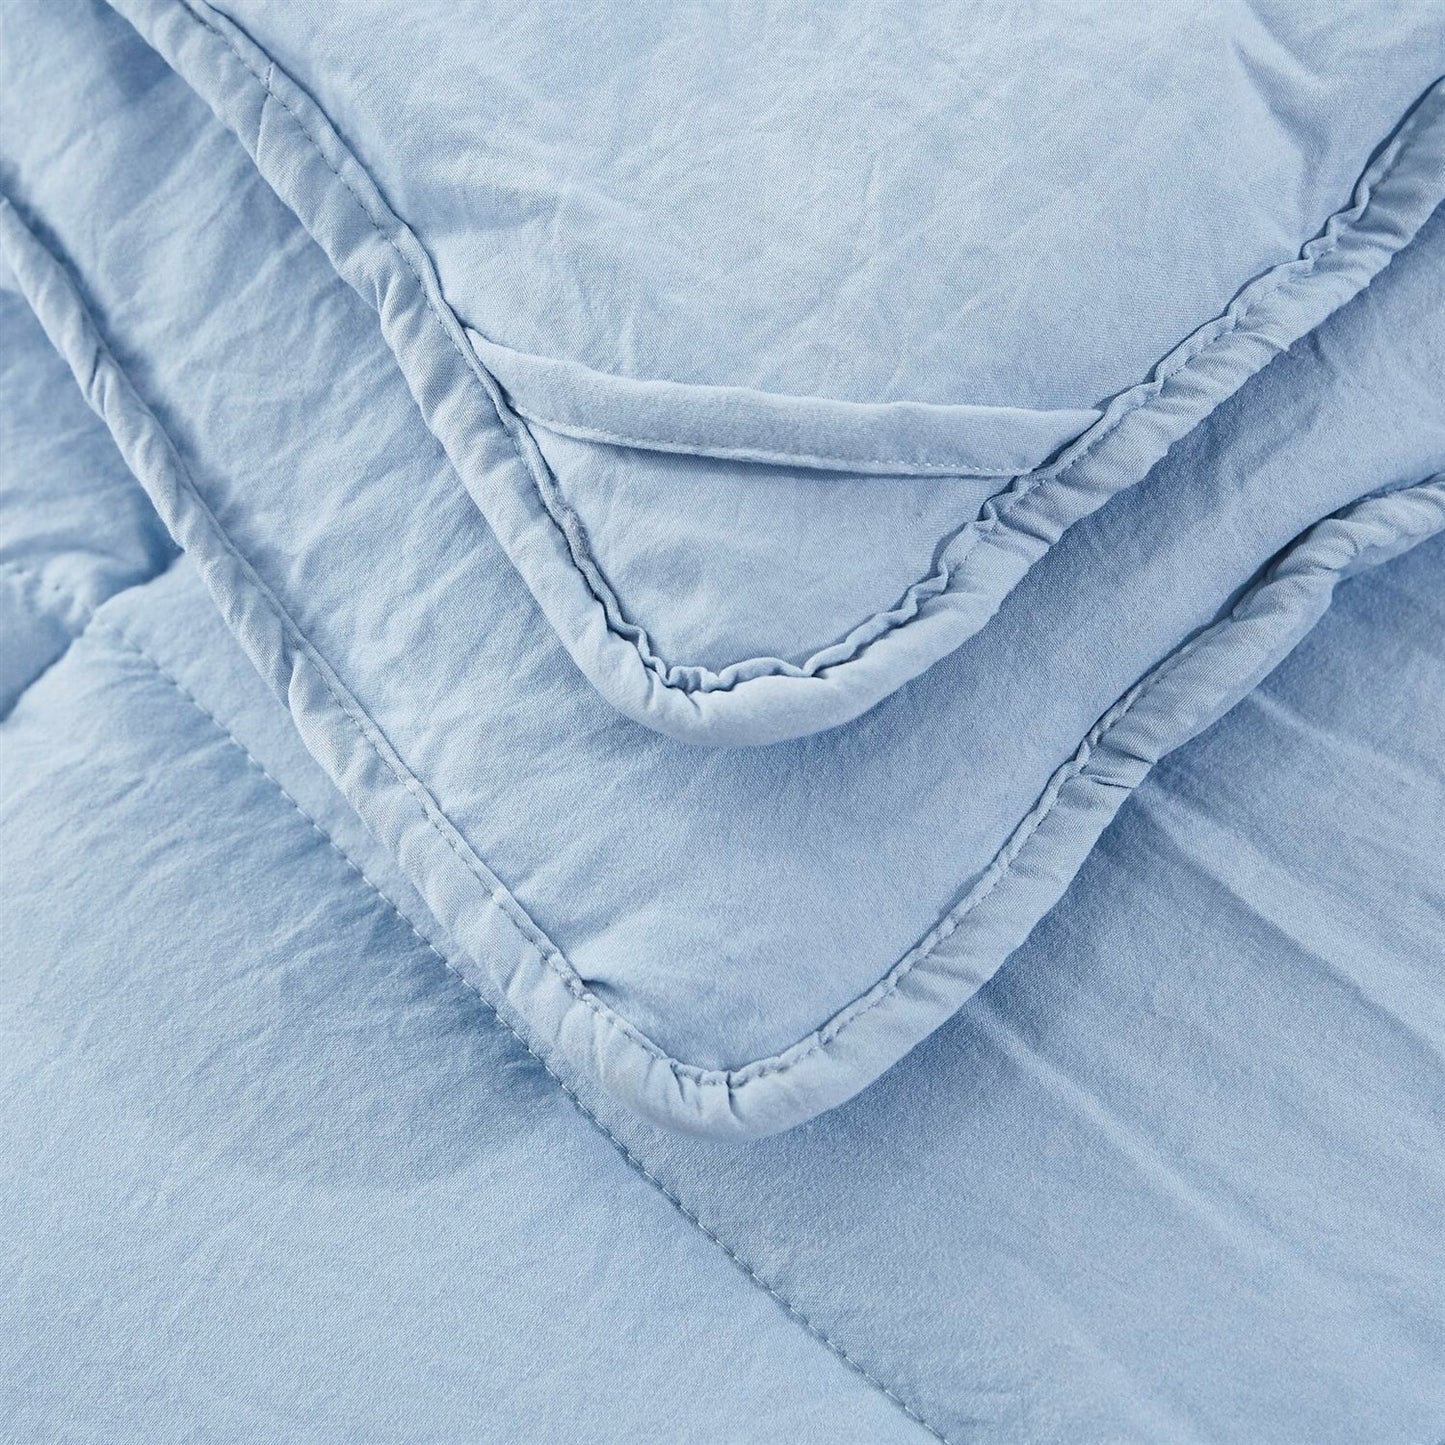 Bedroom > Comforters And Sets - King Size Blue 3 Piece Microfiber Reversible Comforter Set